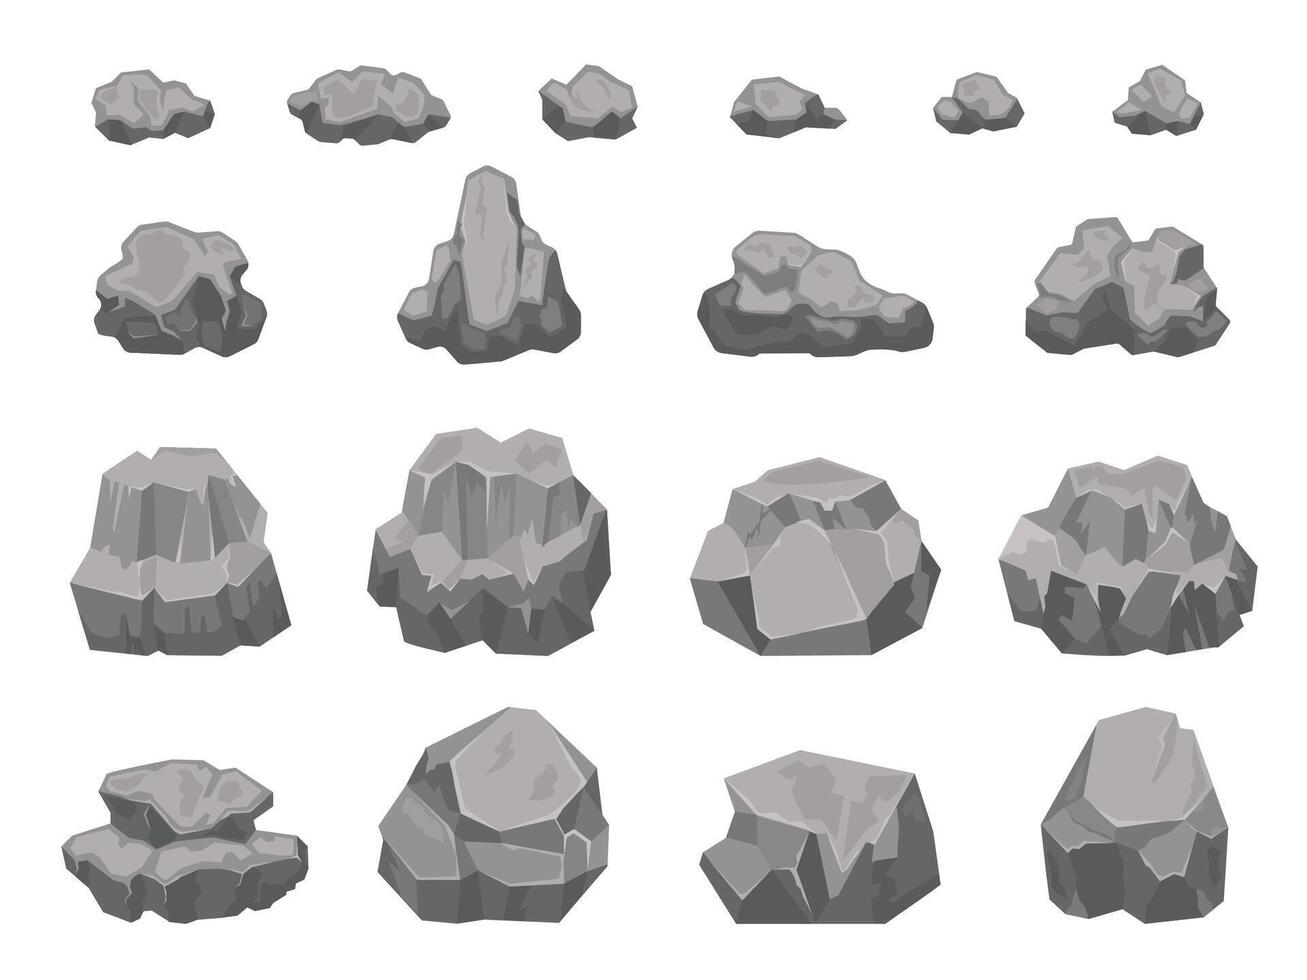 Cartoon stones, rocks, boulders, rubble and gravel pieces. Natural granite construction material. Rock debris, landscape elements vector set